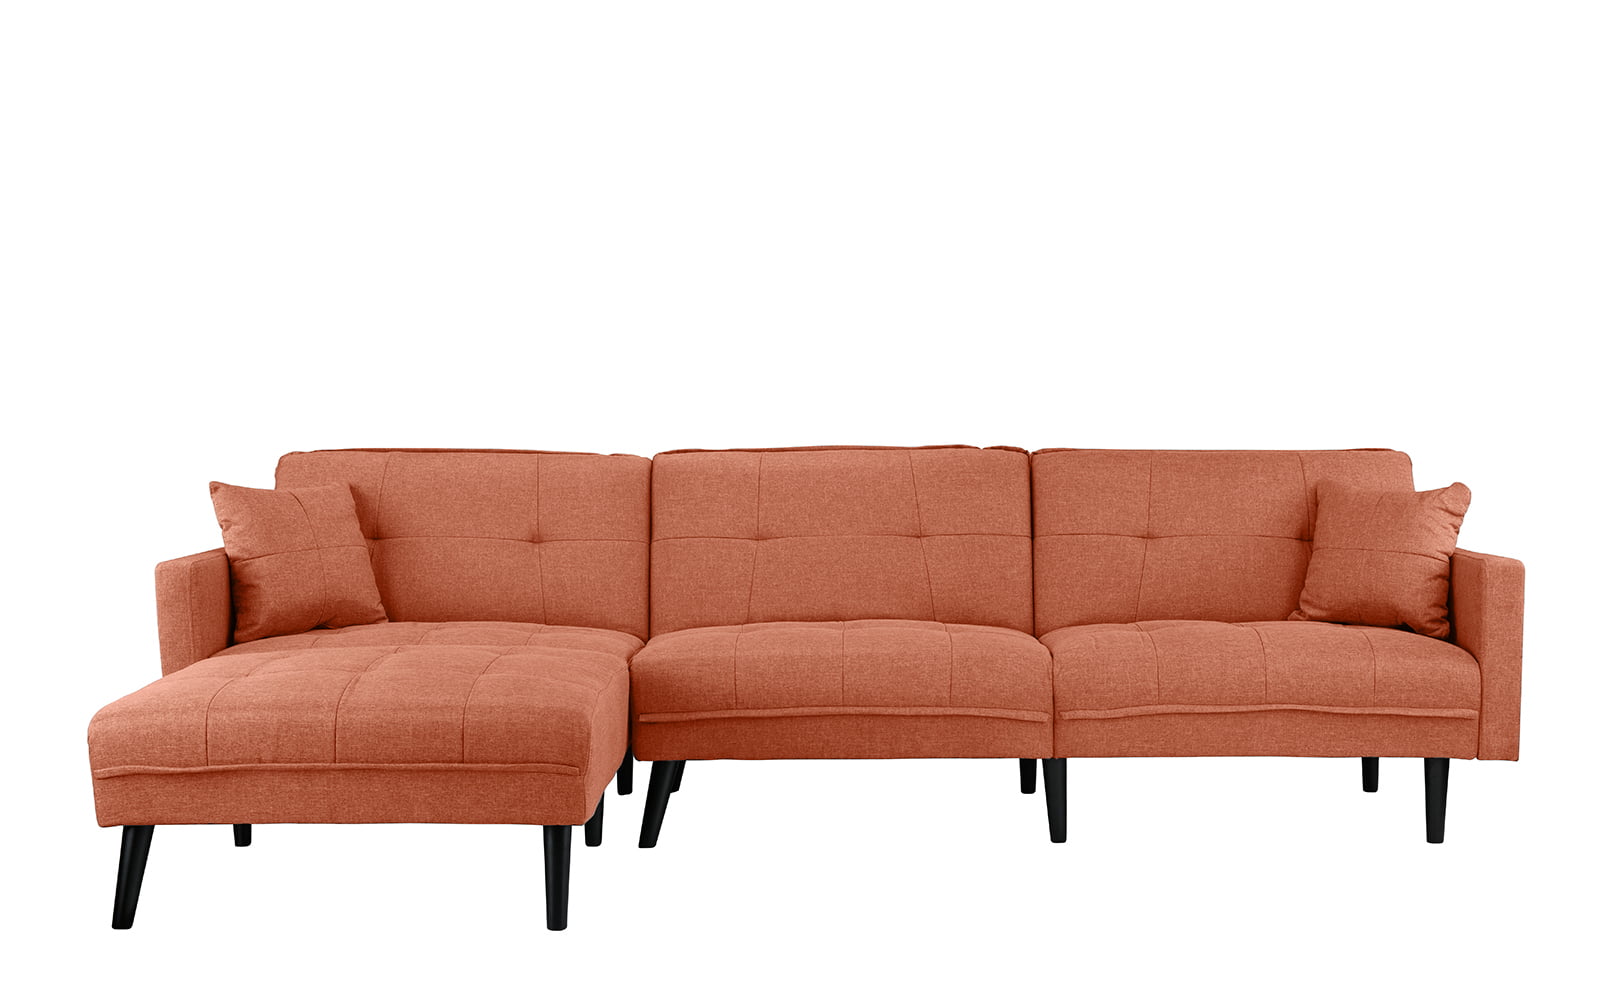 contemporary style futon sleeper sofa bed